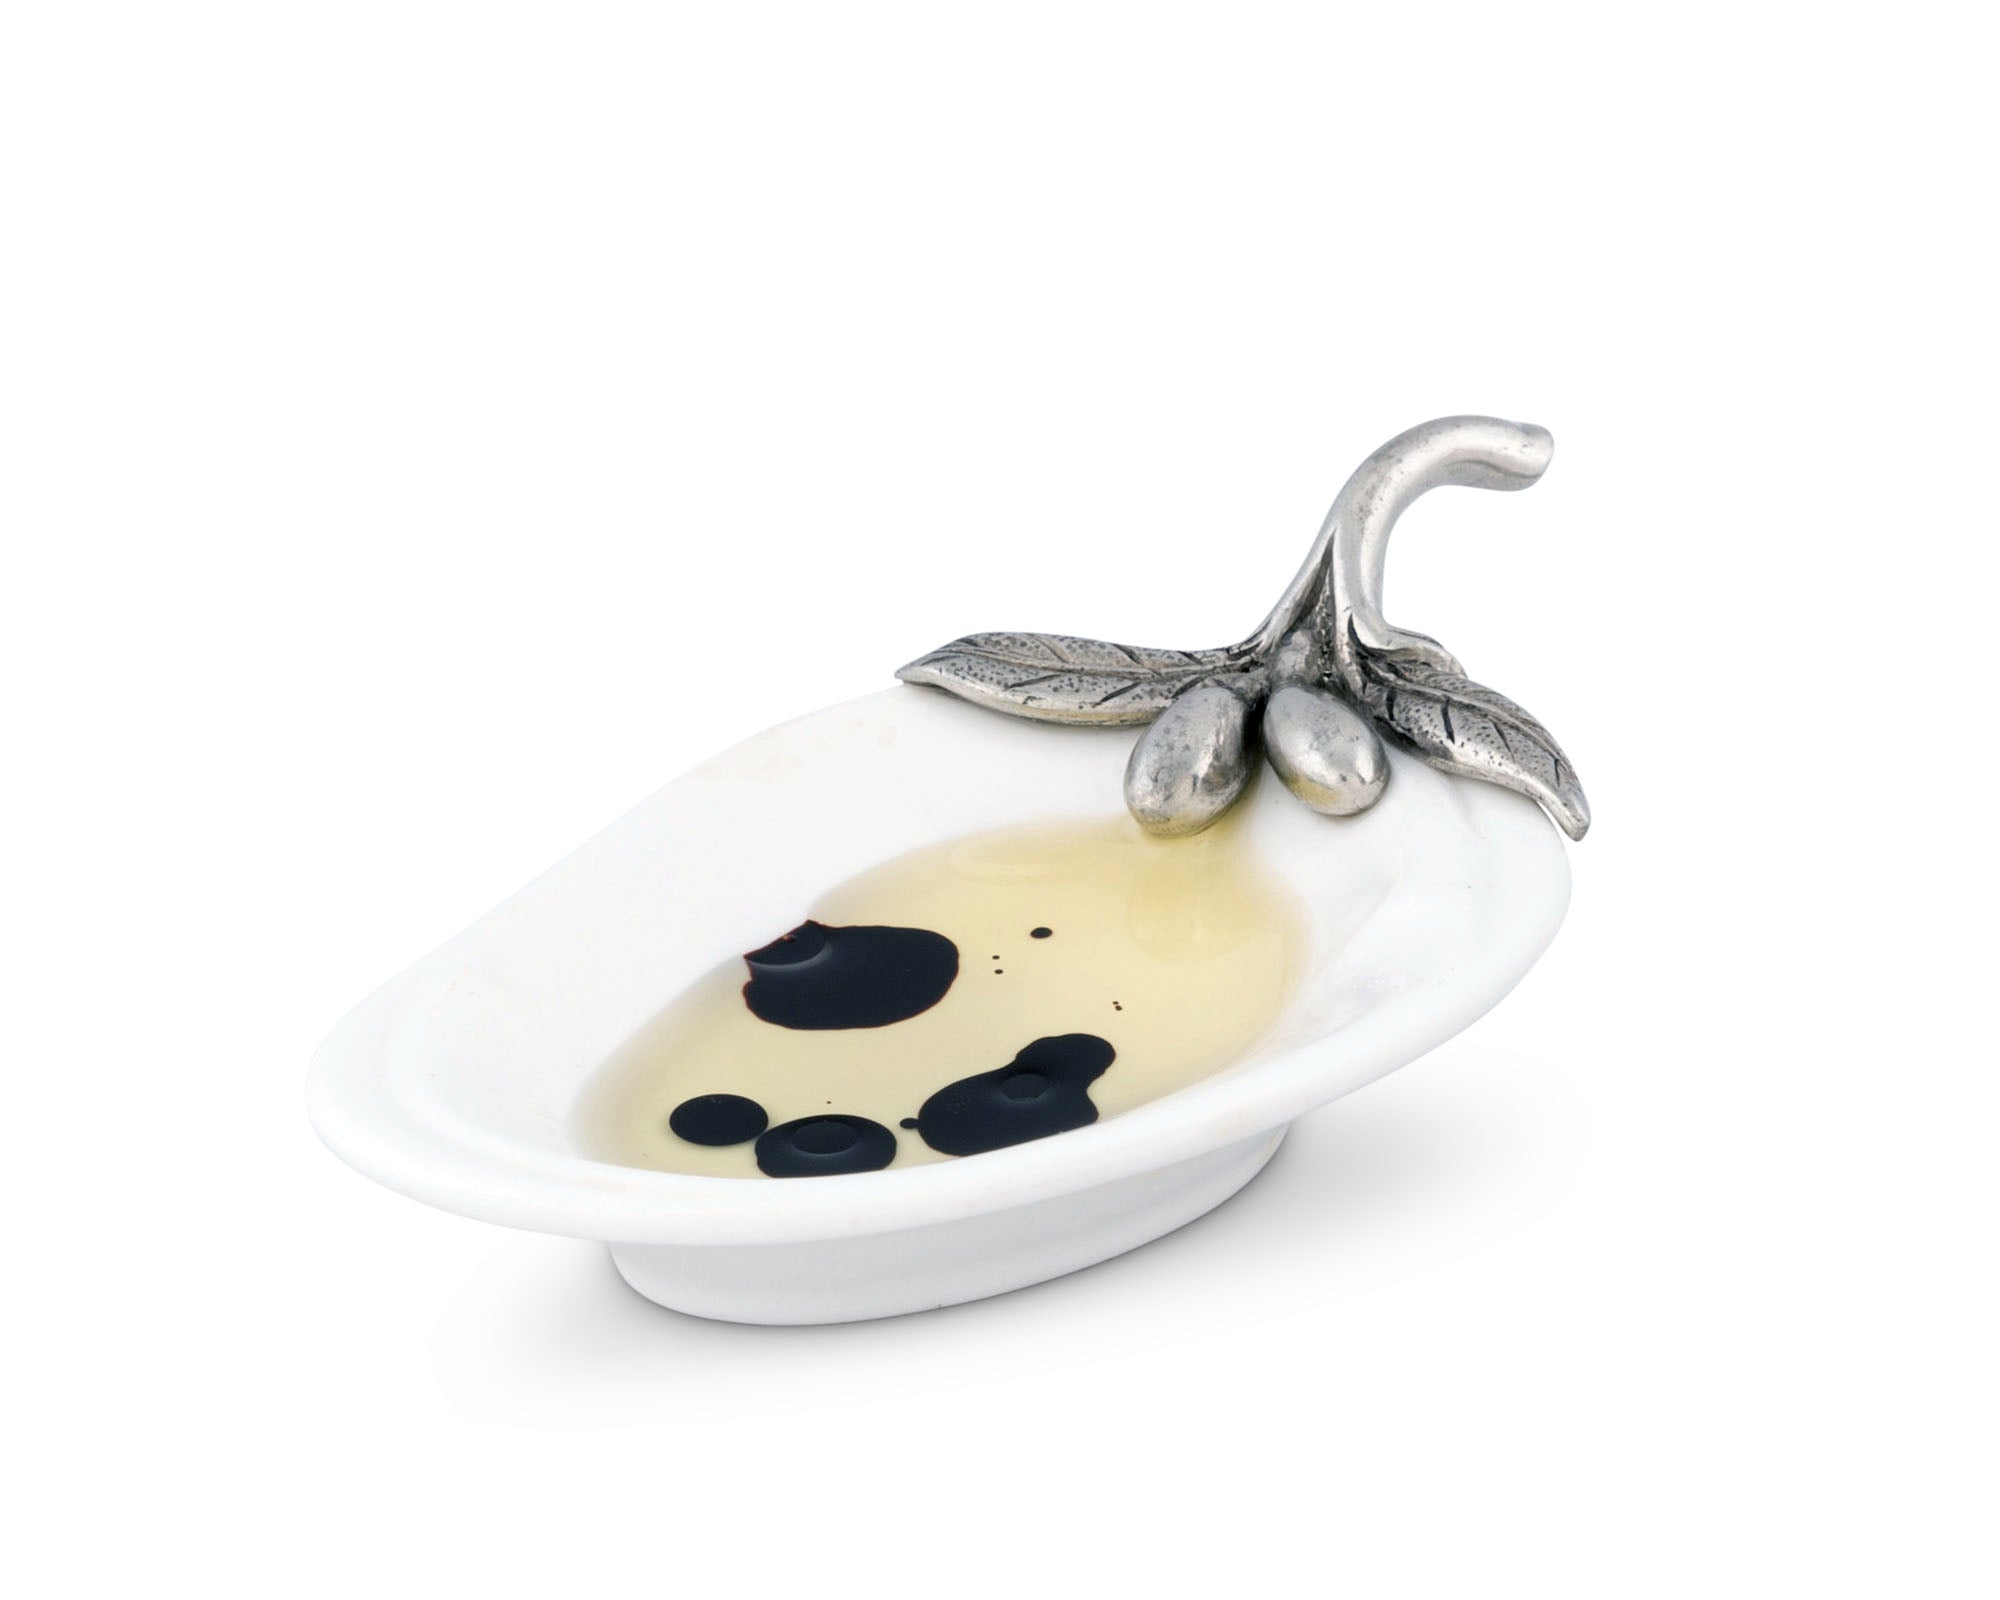 Vagabond House Olive Oil Server / Spoon Rest Product Image